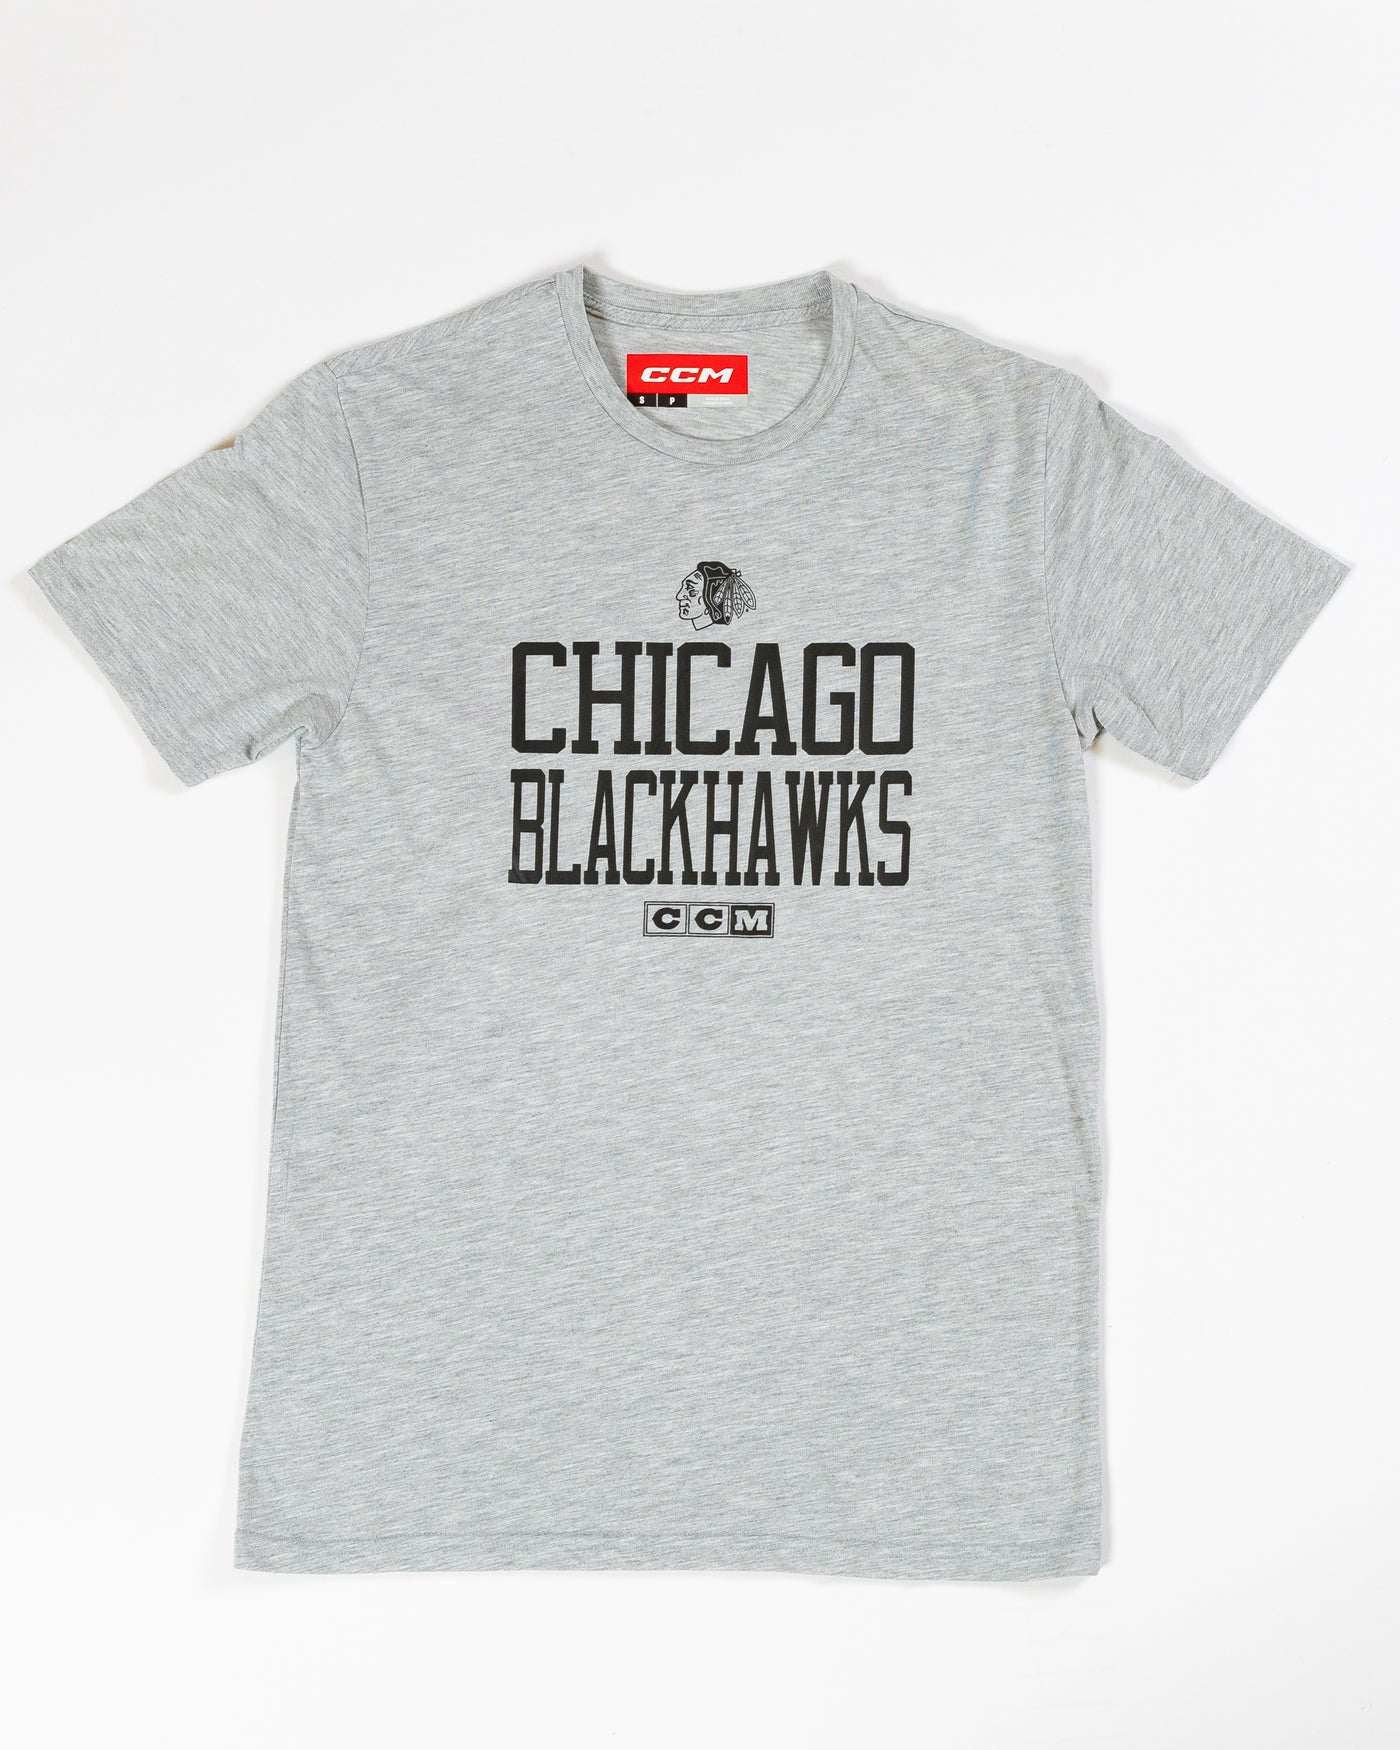 L) Vintage Chicago Blackhawks Shirt